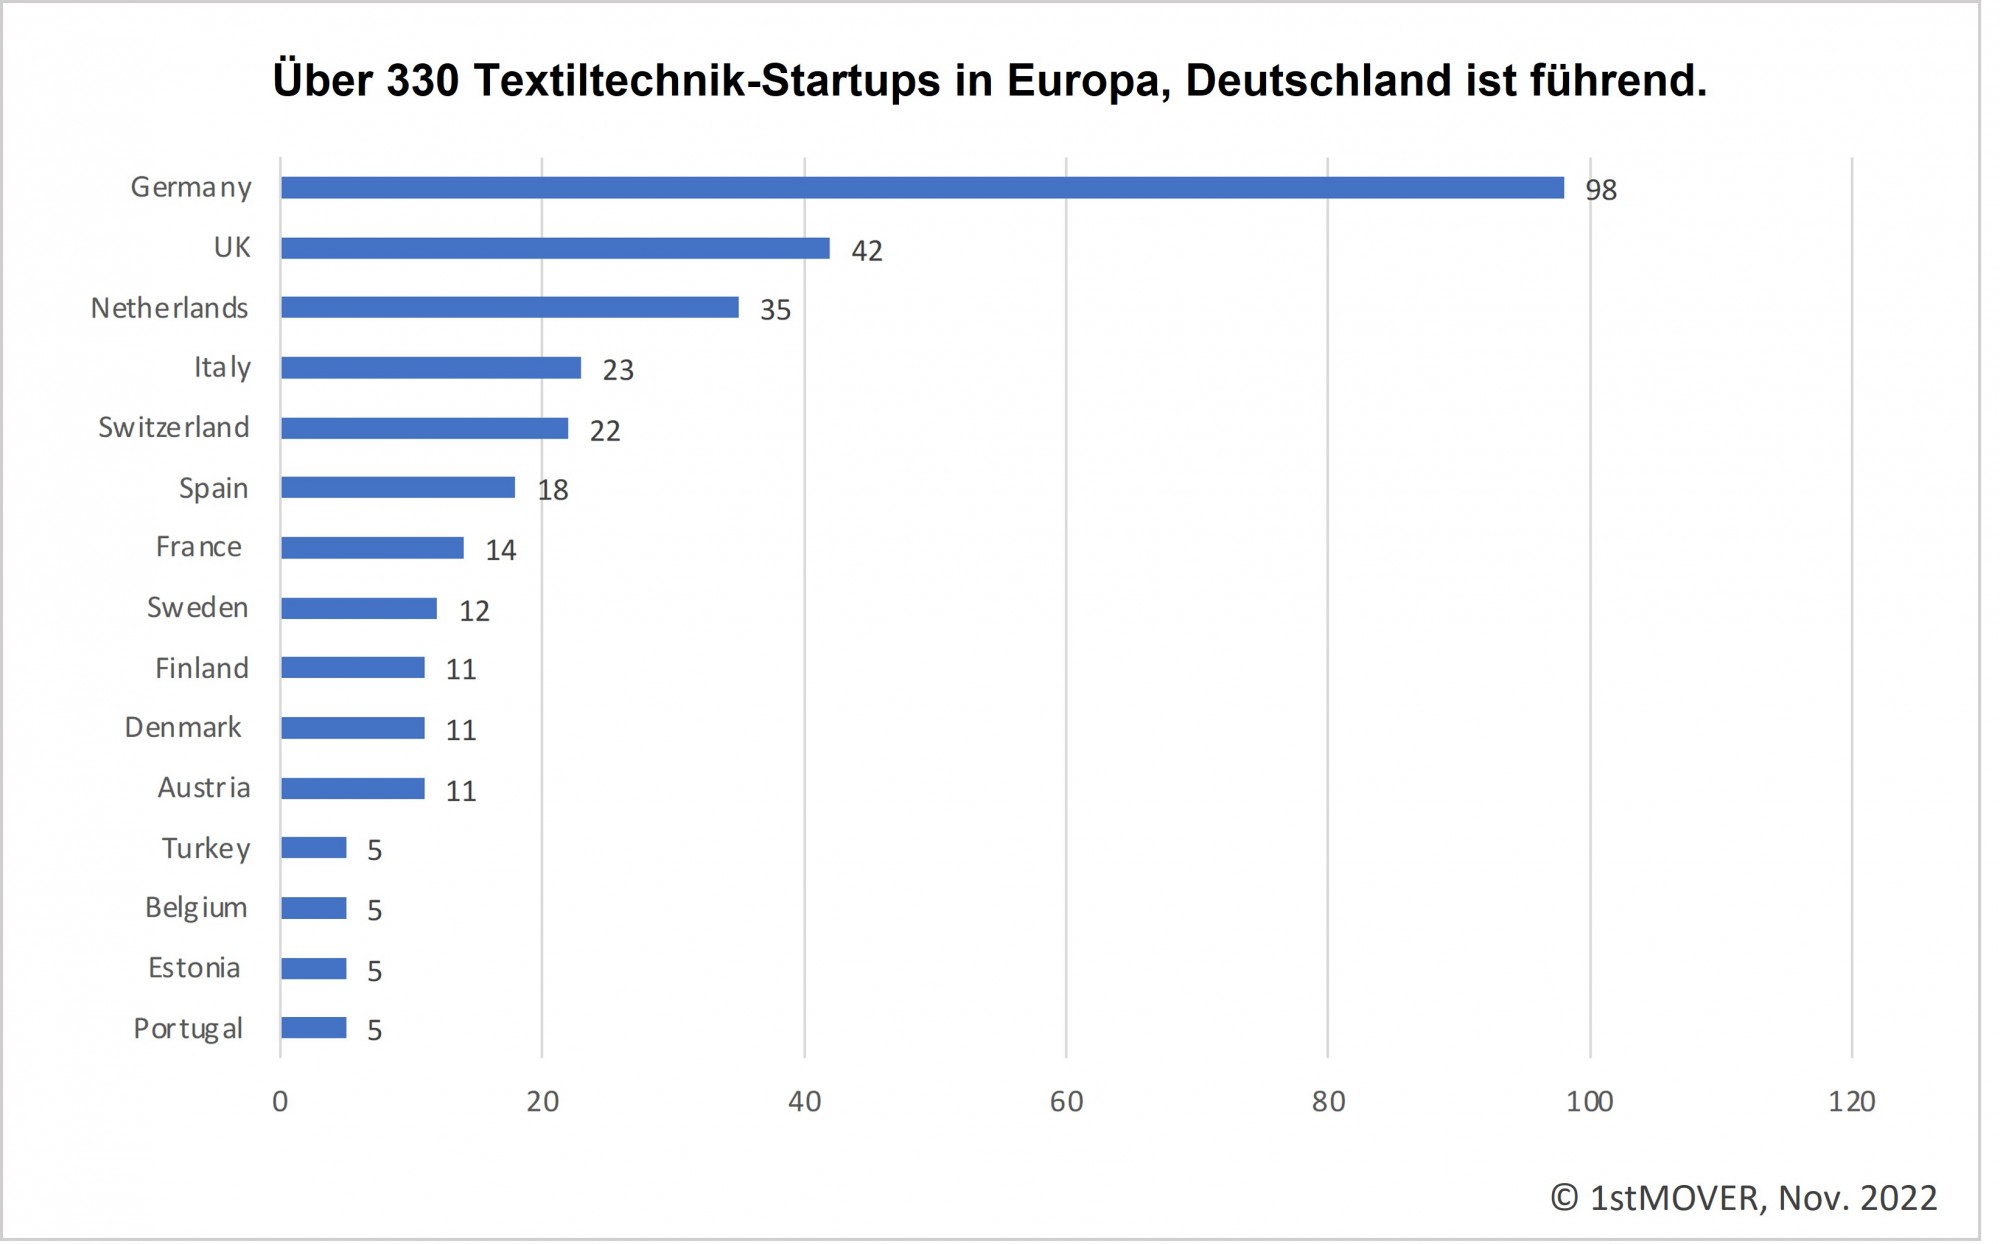 Textiltechnik-Startups in Europa (Quelle: 1stMOVER Nov. 2022)